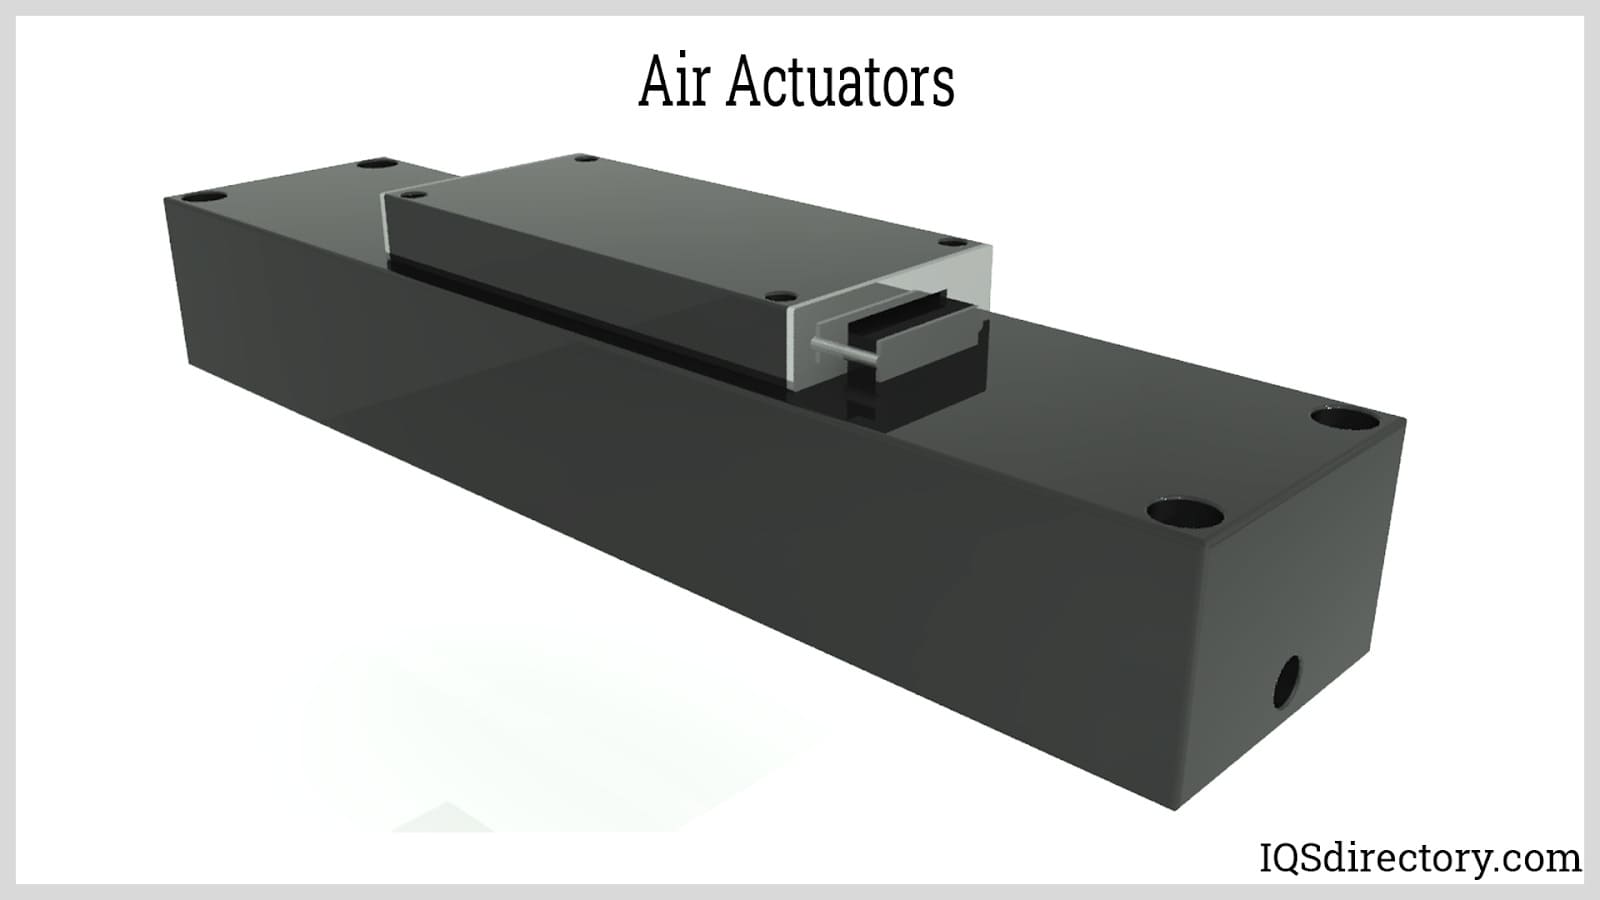 Air Actuators